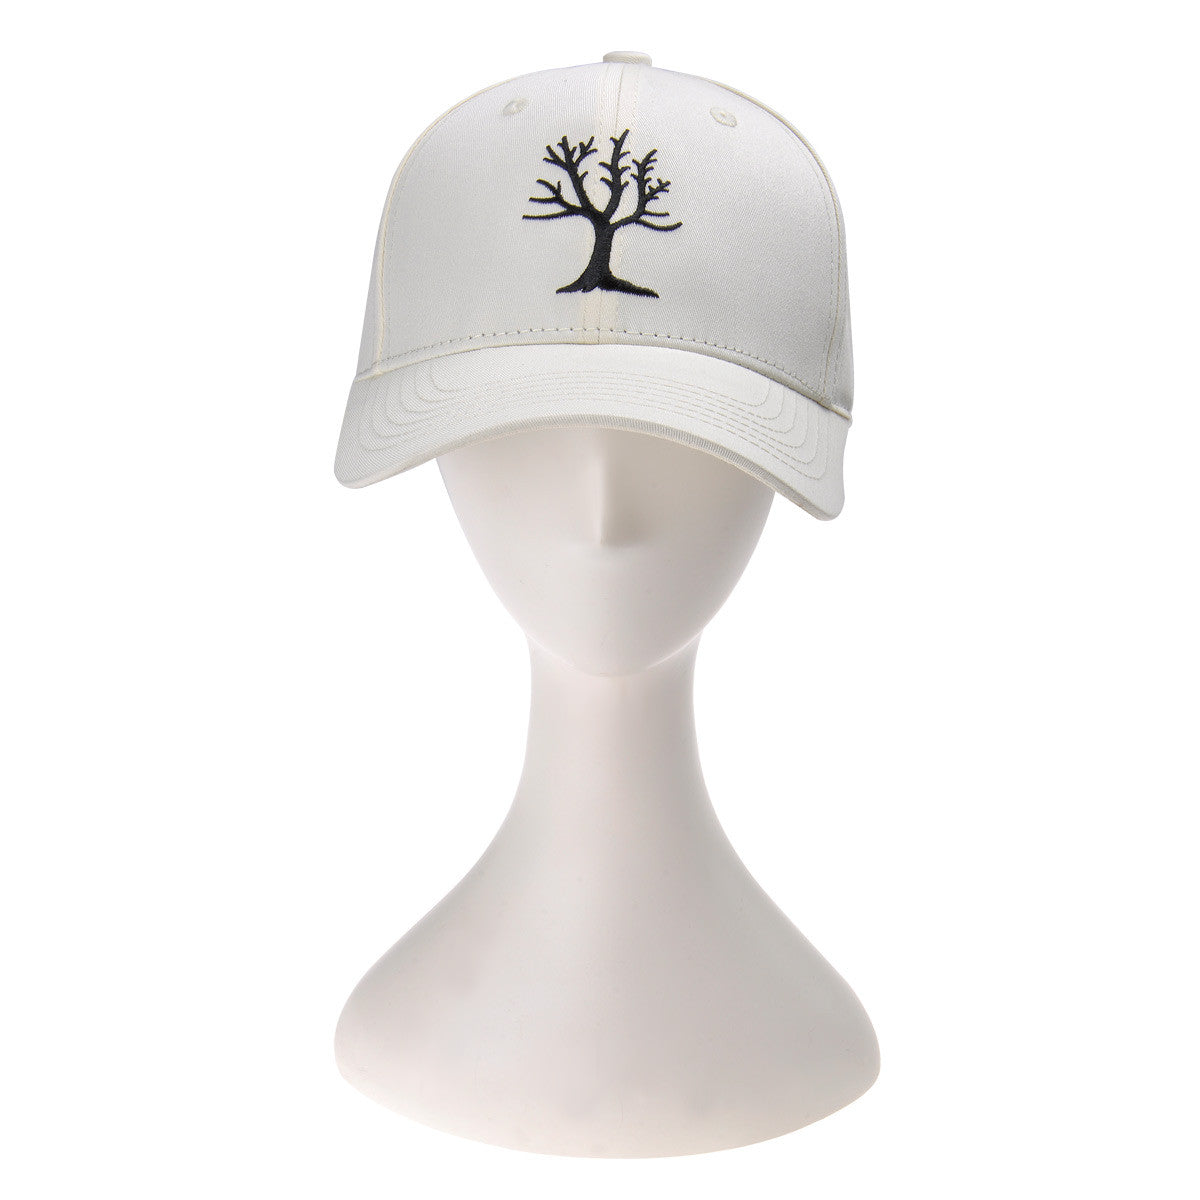 Baseball Caps Adjustable Cotton Cap Fashion Embroidered Hat for Men Women Boys Girls